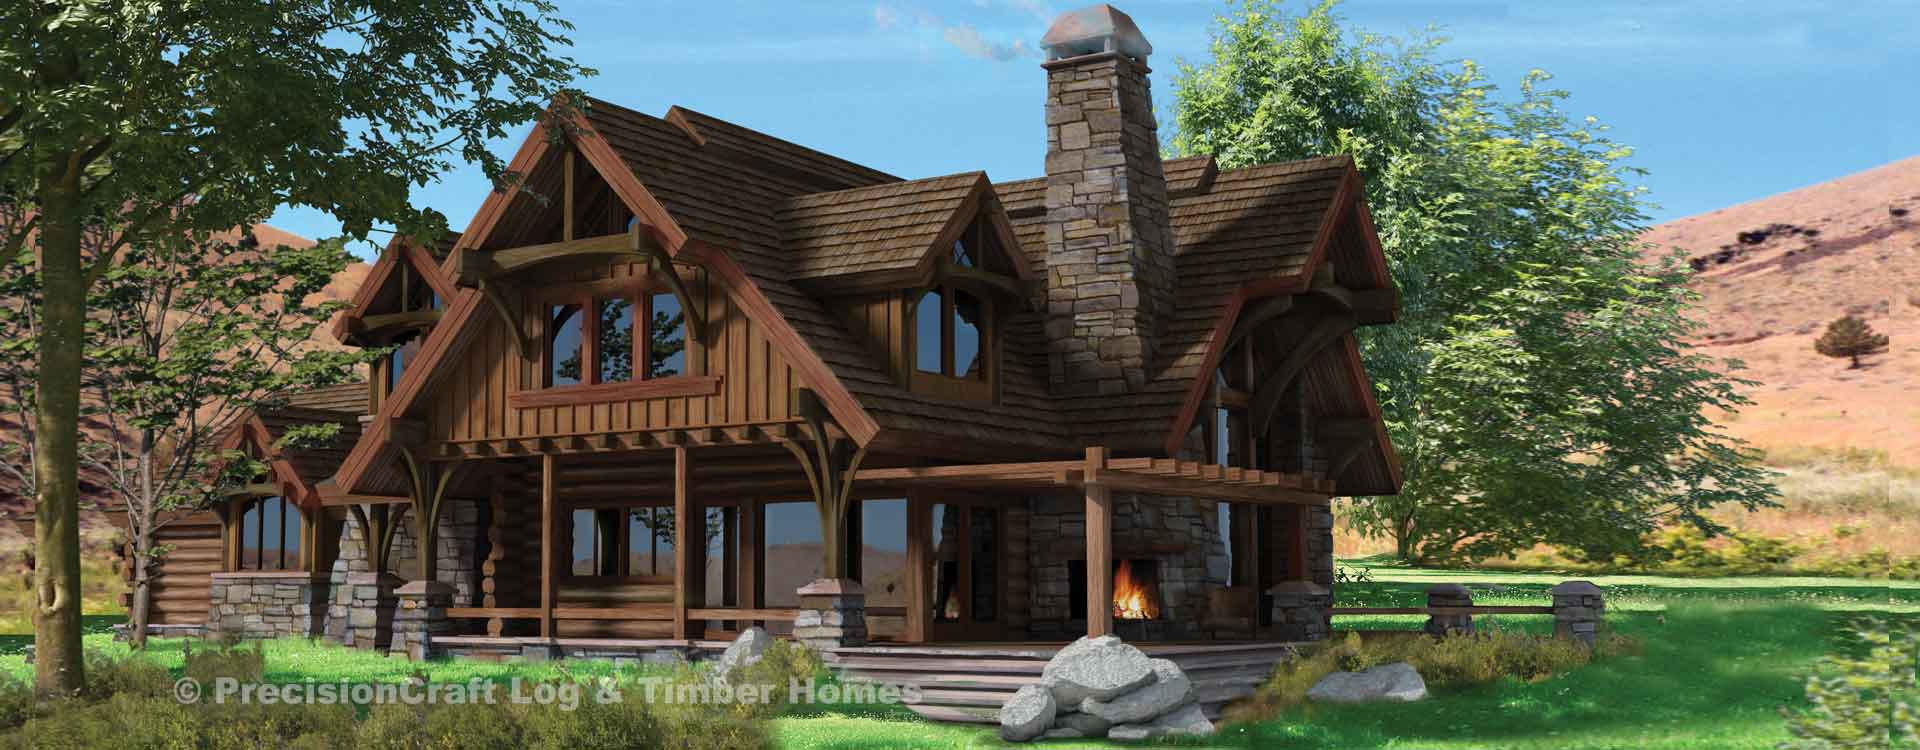 Flat Iron Chalet Log Home Rendering